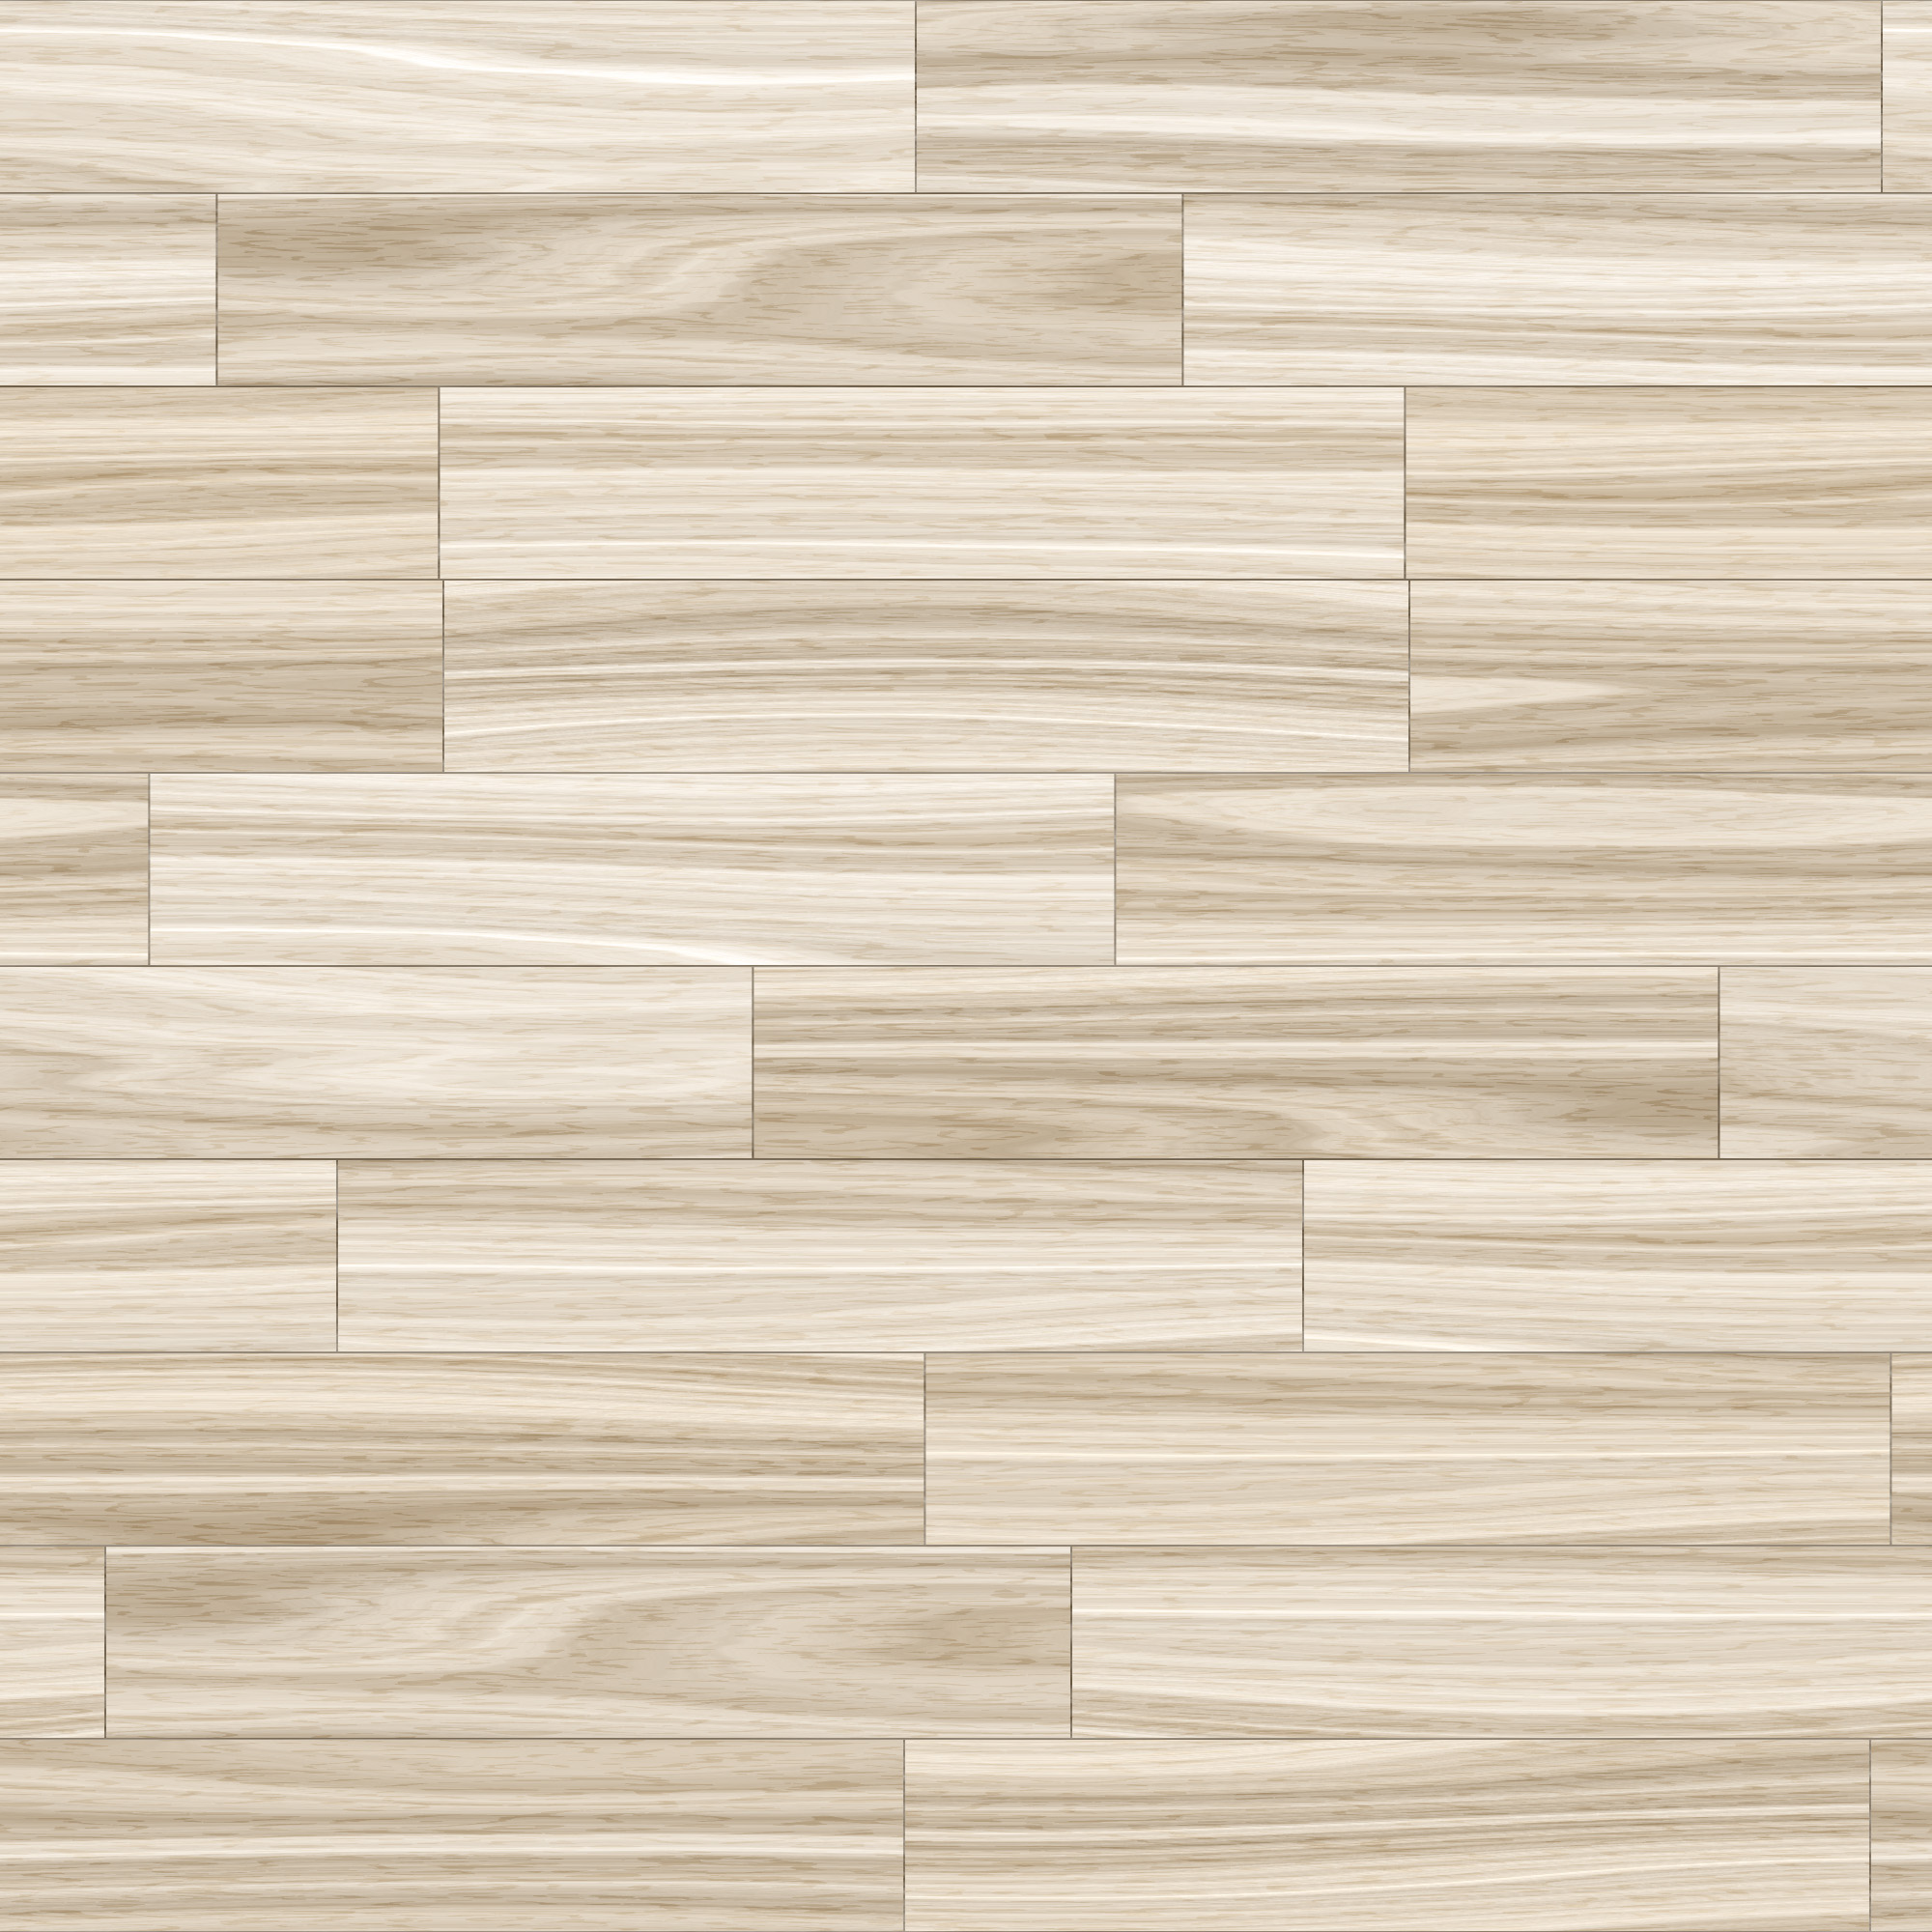 grey brown seamless wooden flooring texture | www.myfreetextures.com